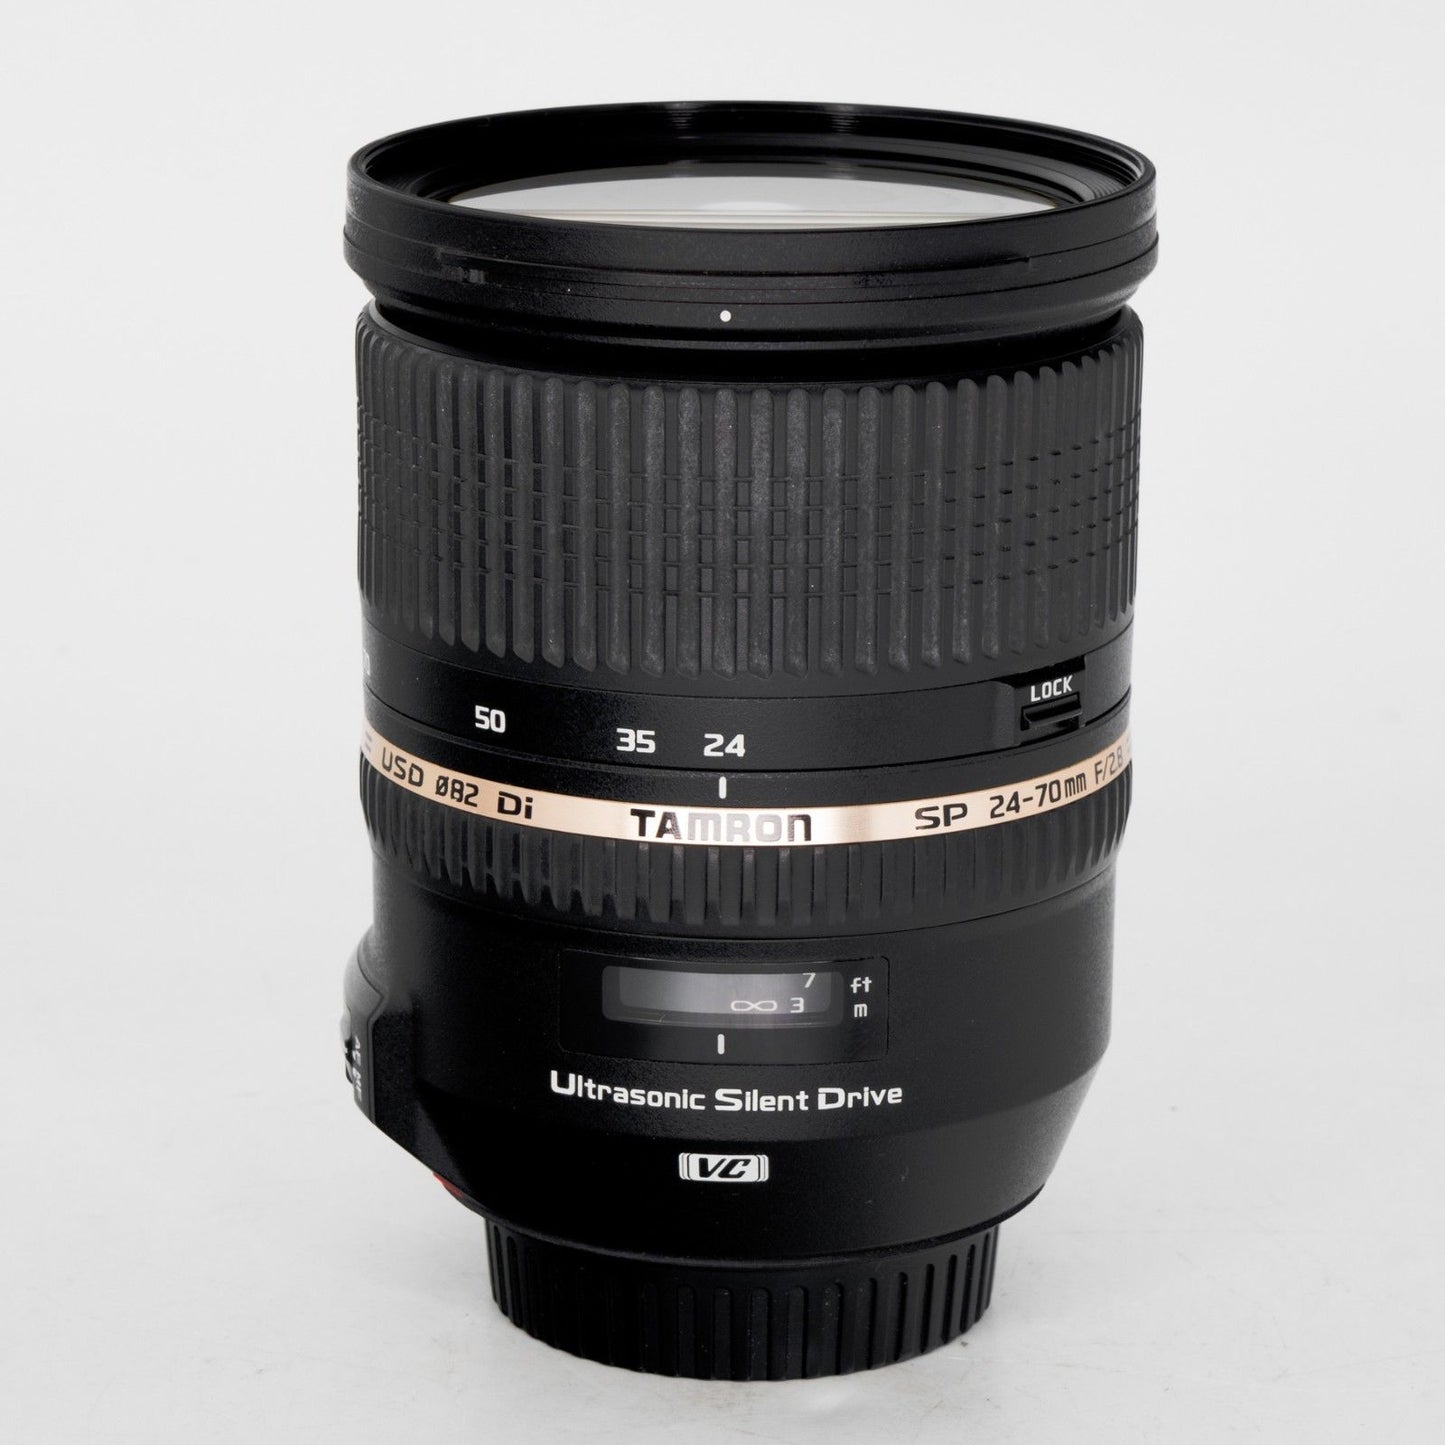 Tamron A007 SP 24-70mm f/2.8 DI VC USD Lens for Nikon F